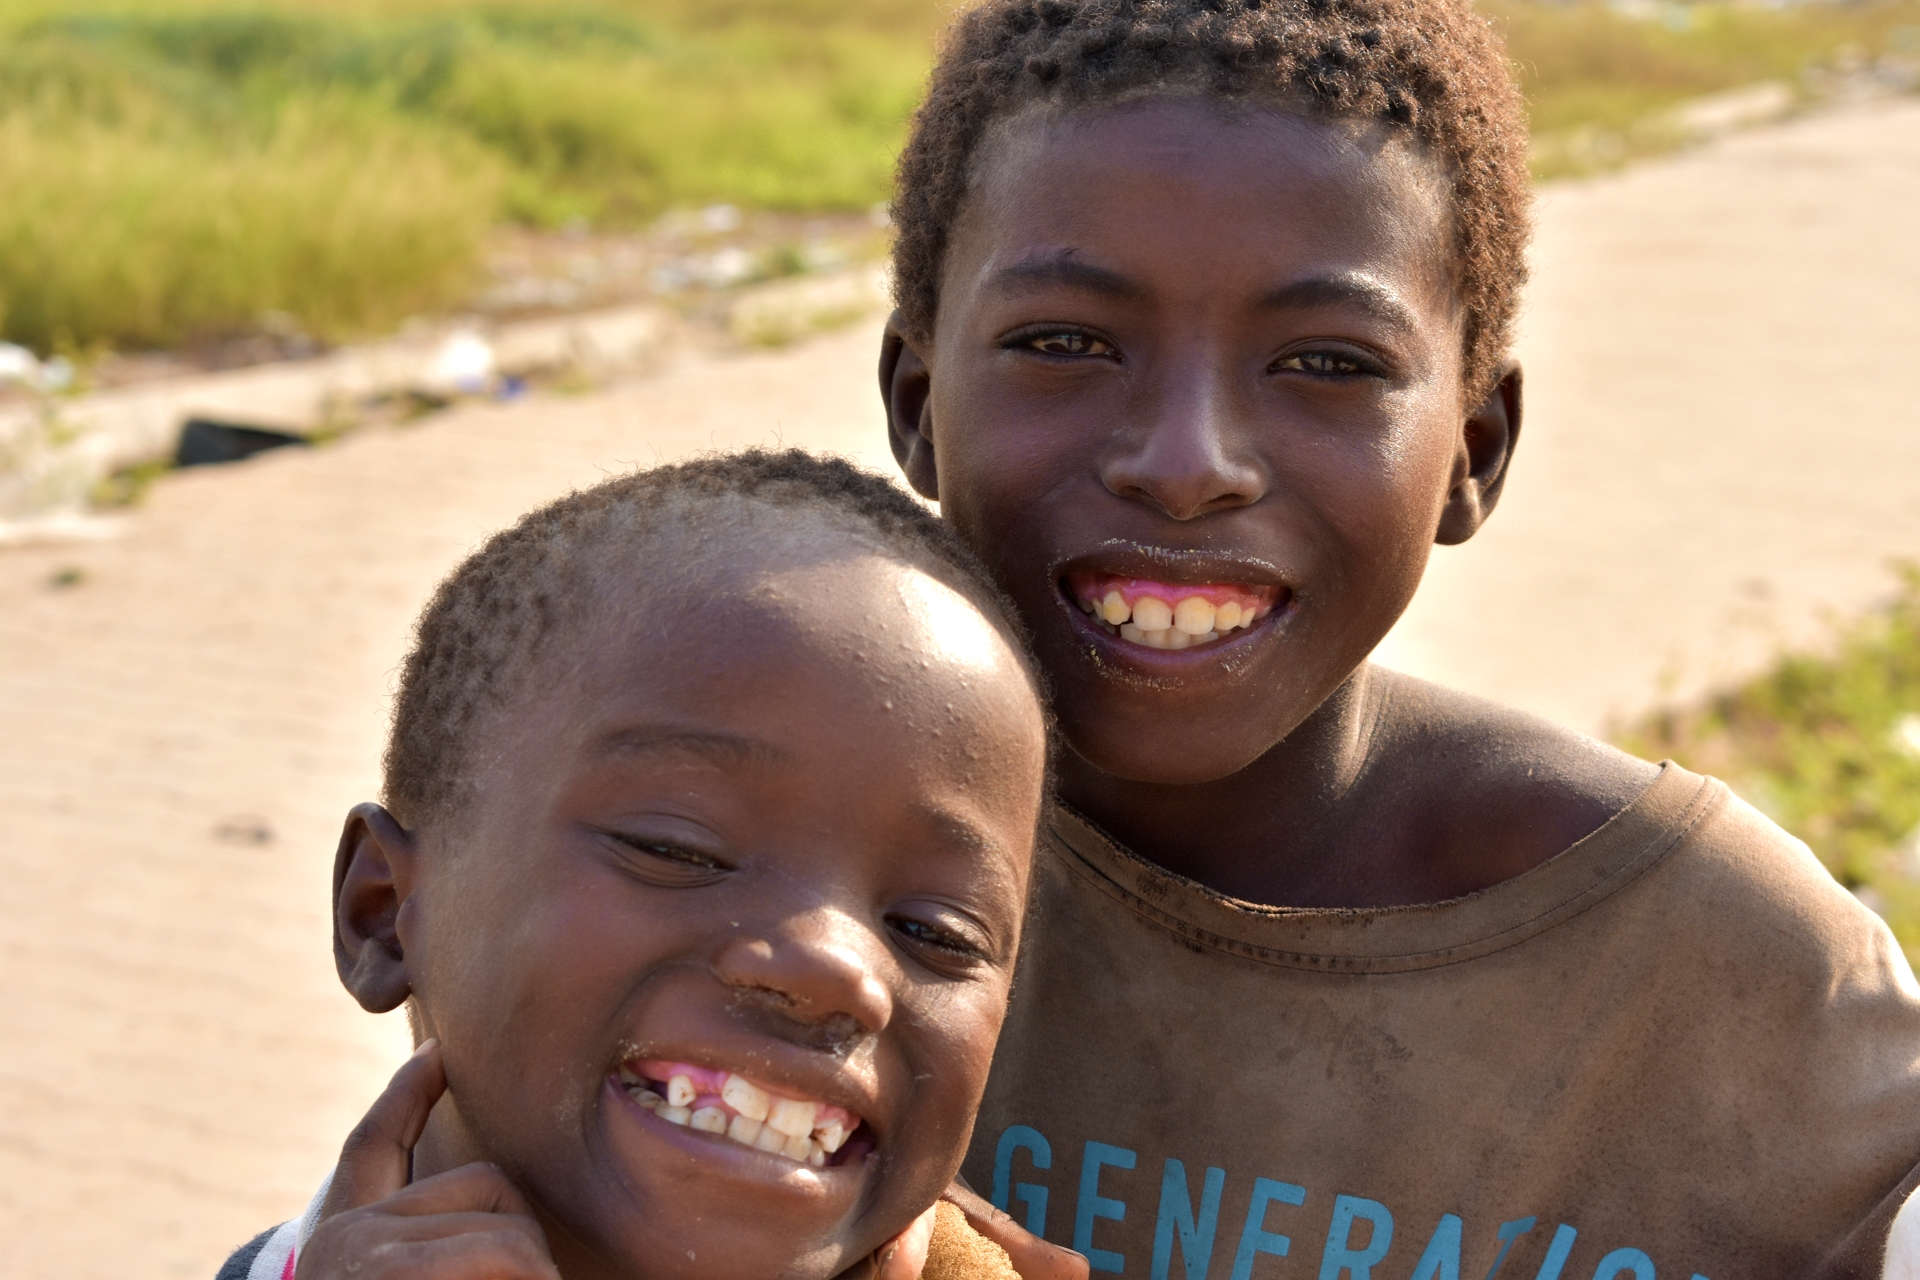 Niños de Angola sonriendo